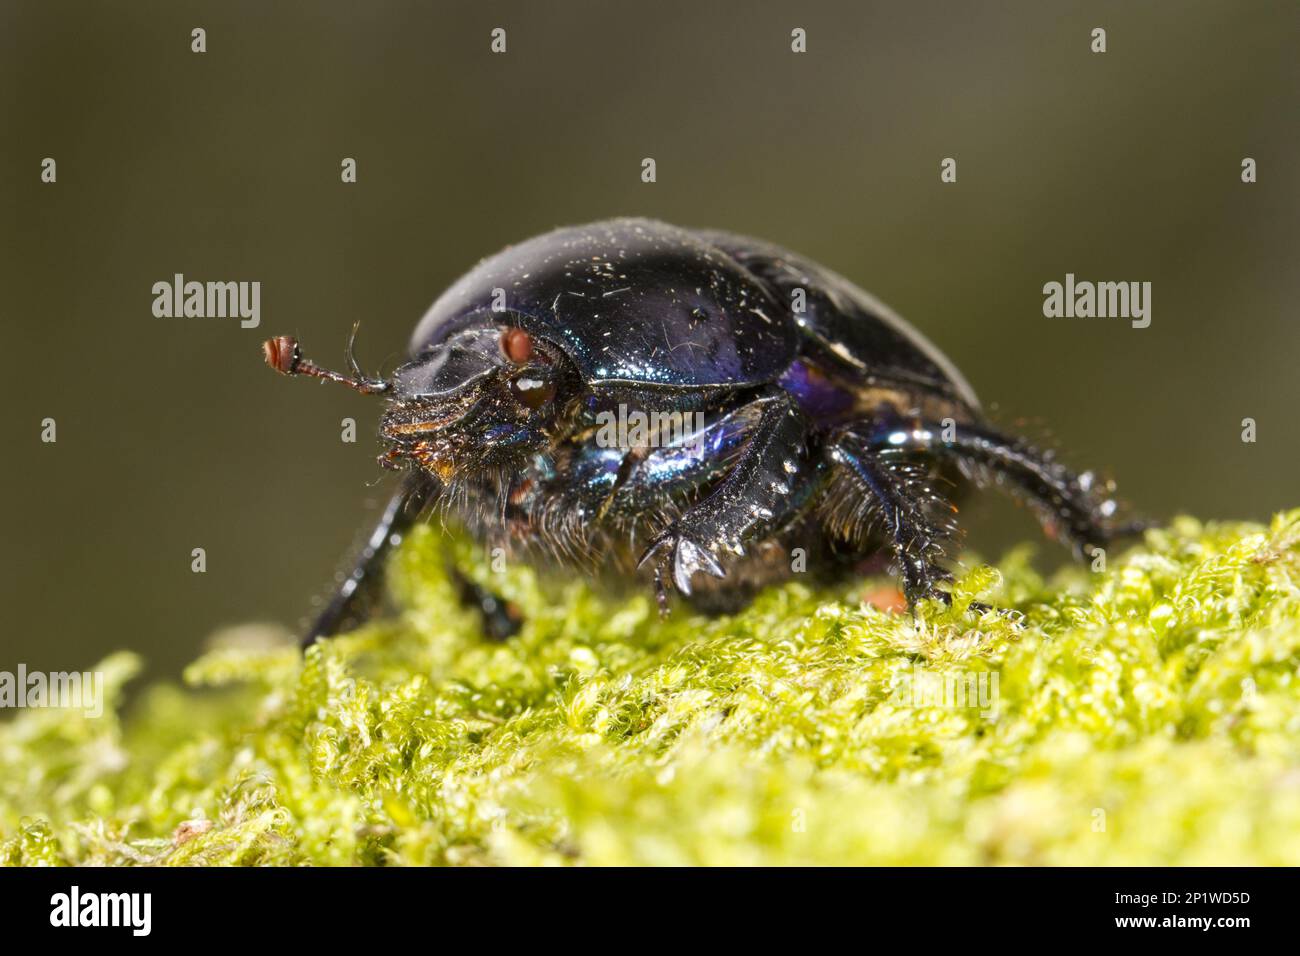 Dung Beetle (Geotrupes stercorarius), Horse Beetle, Common Dung Beetle, andere Tiere, Insekten, Käfer, Tiere, Dor Käfer, ausgewachsen auf Moos. Stockfoto